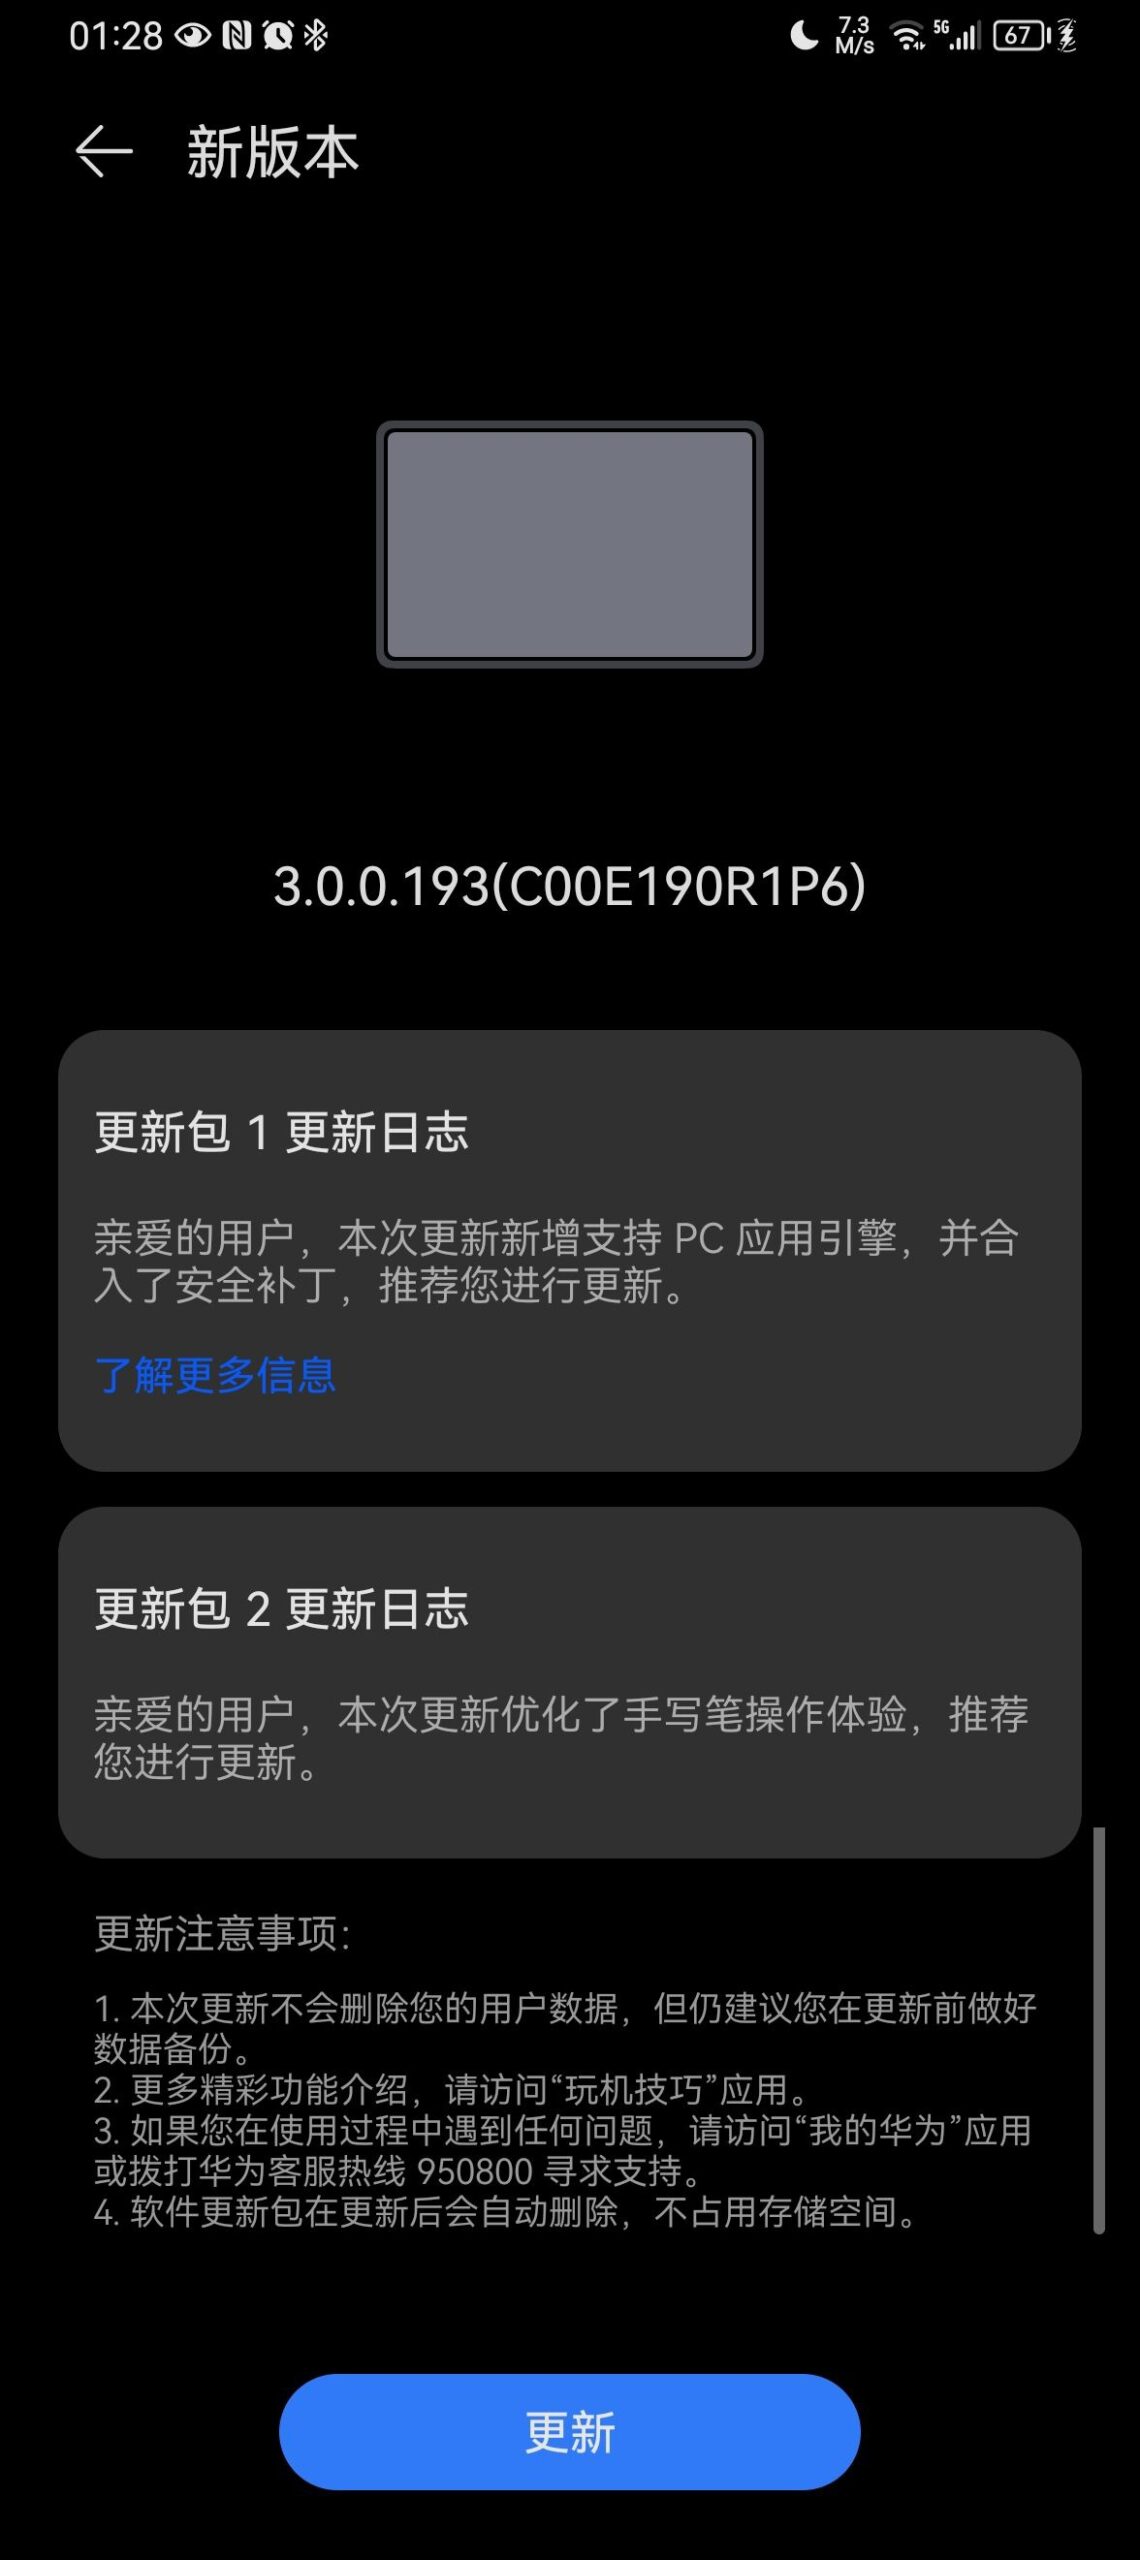 Huawei MatePad 10.8 Update